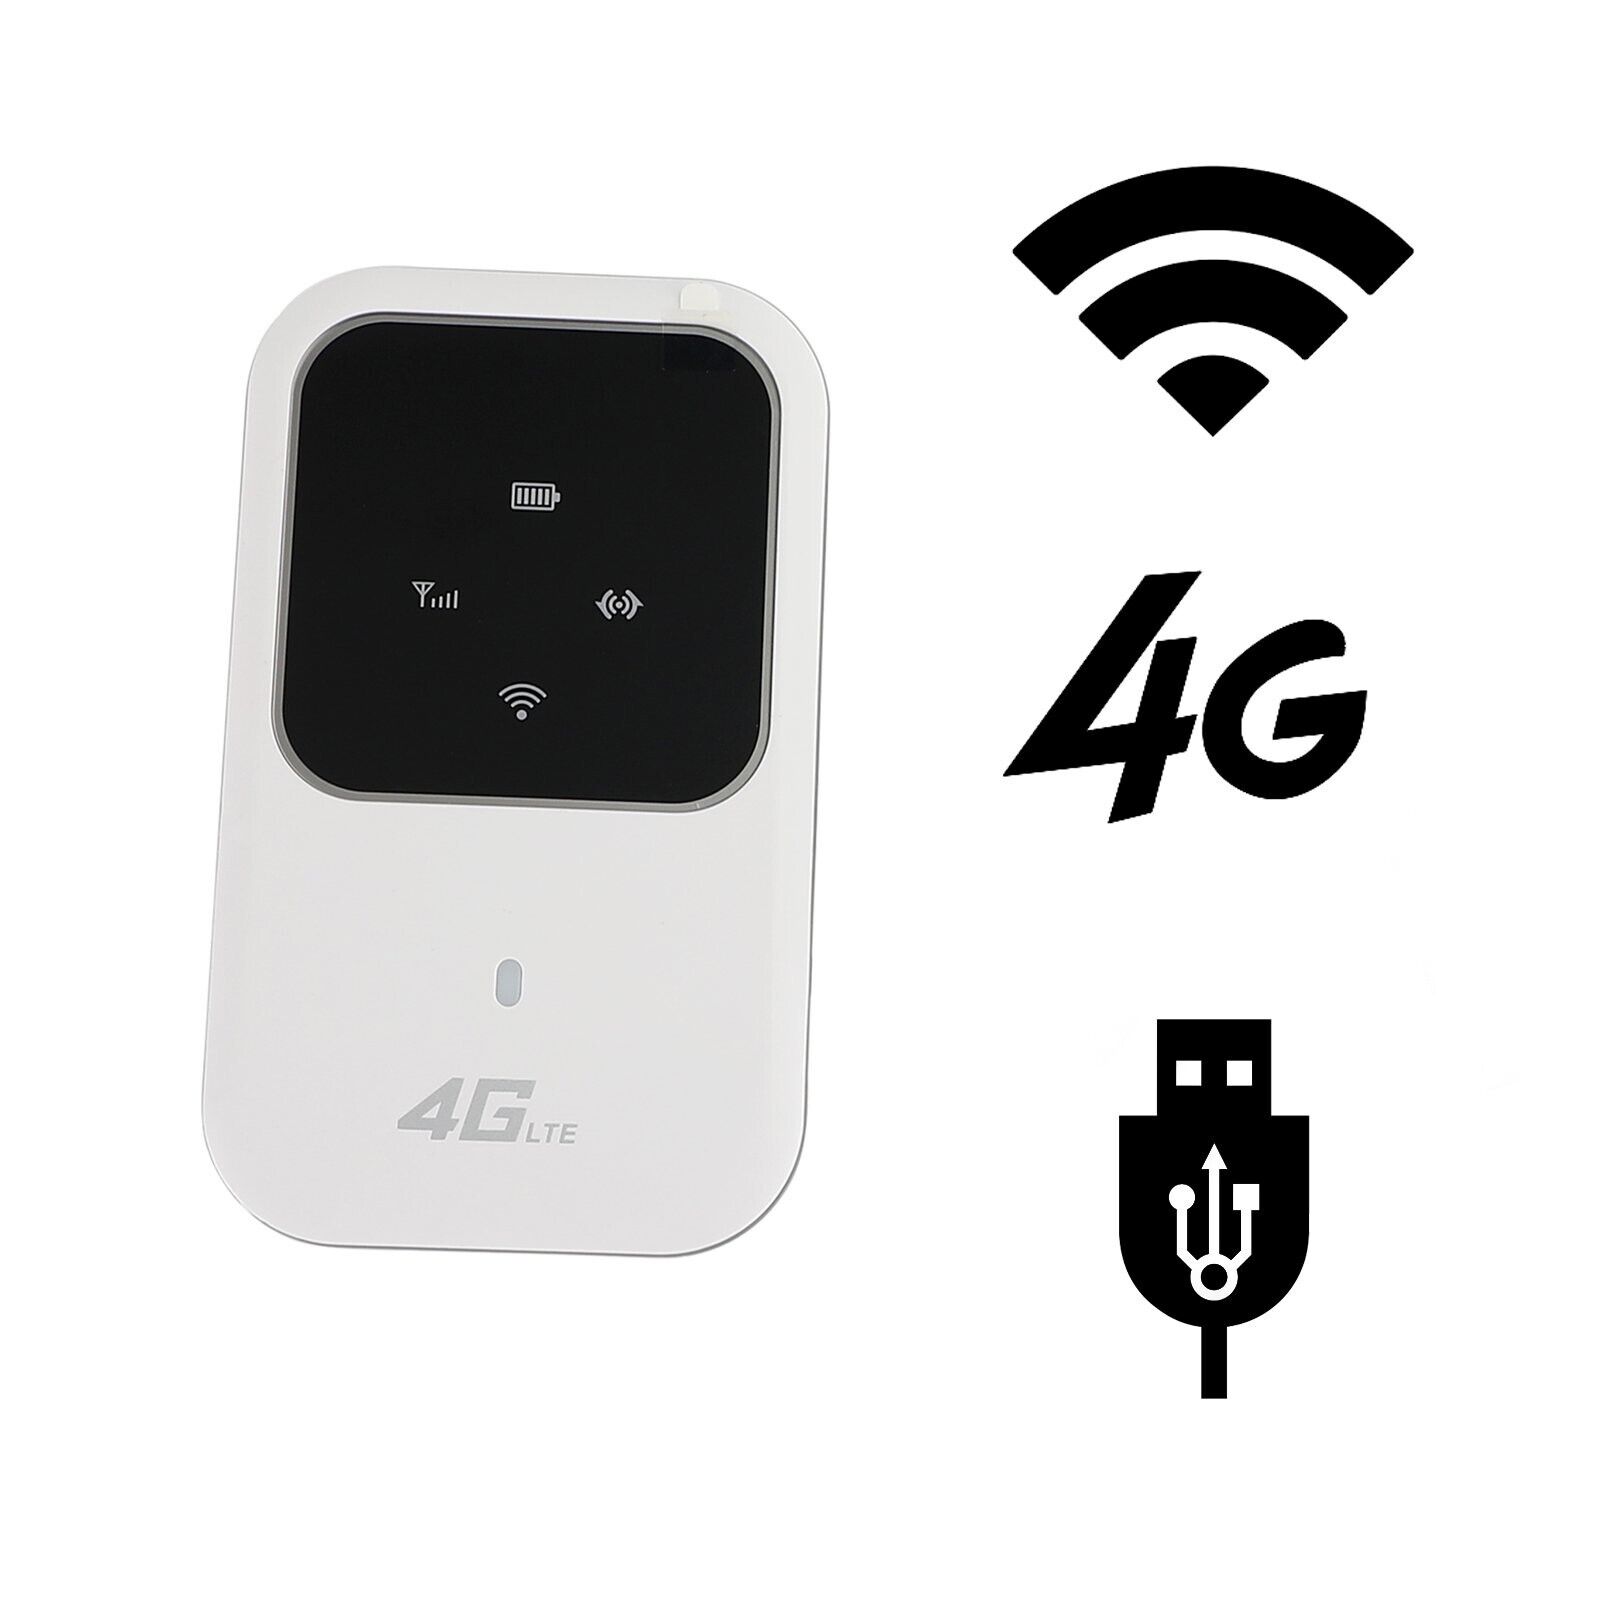 4G 2.4G LTE Portable Broadband Pocket Wireless Router 100Mbps Hotspot SIM Unlock